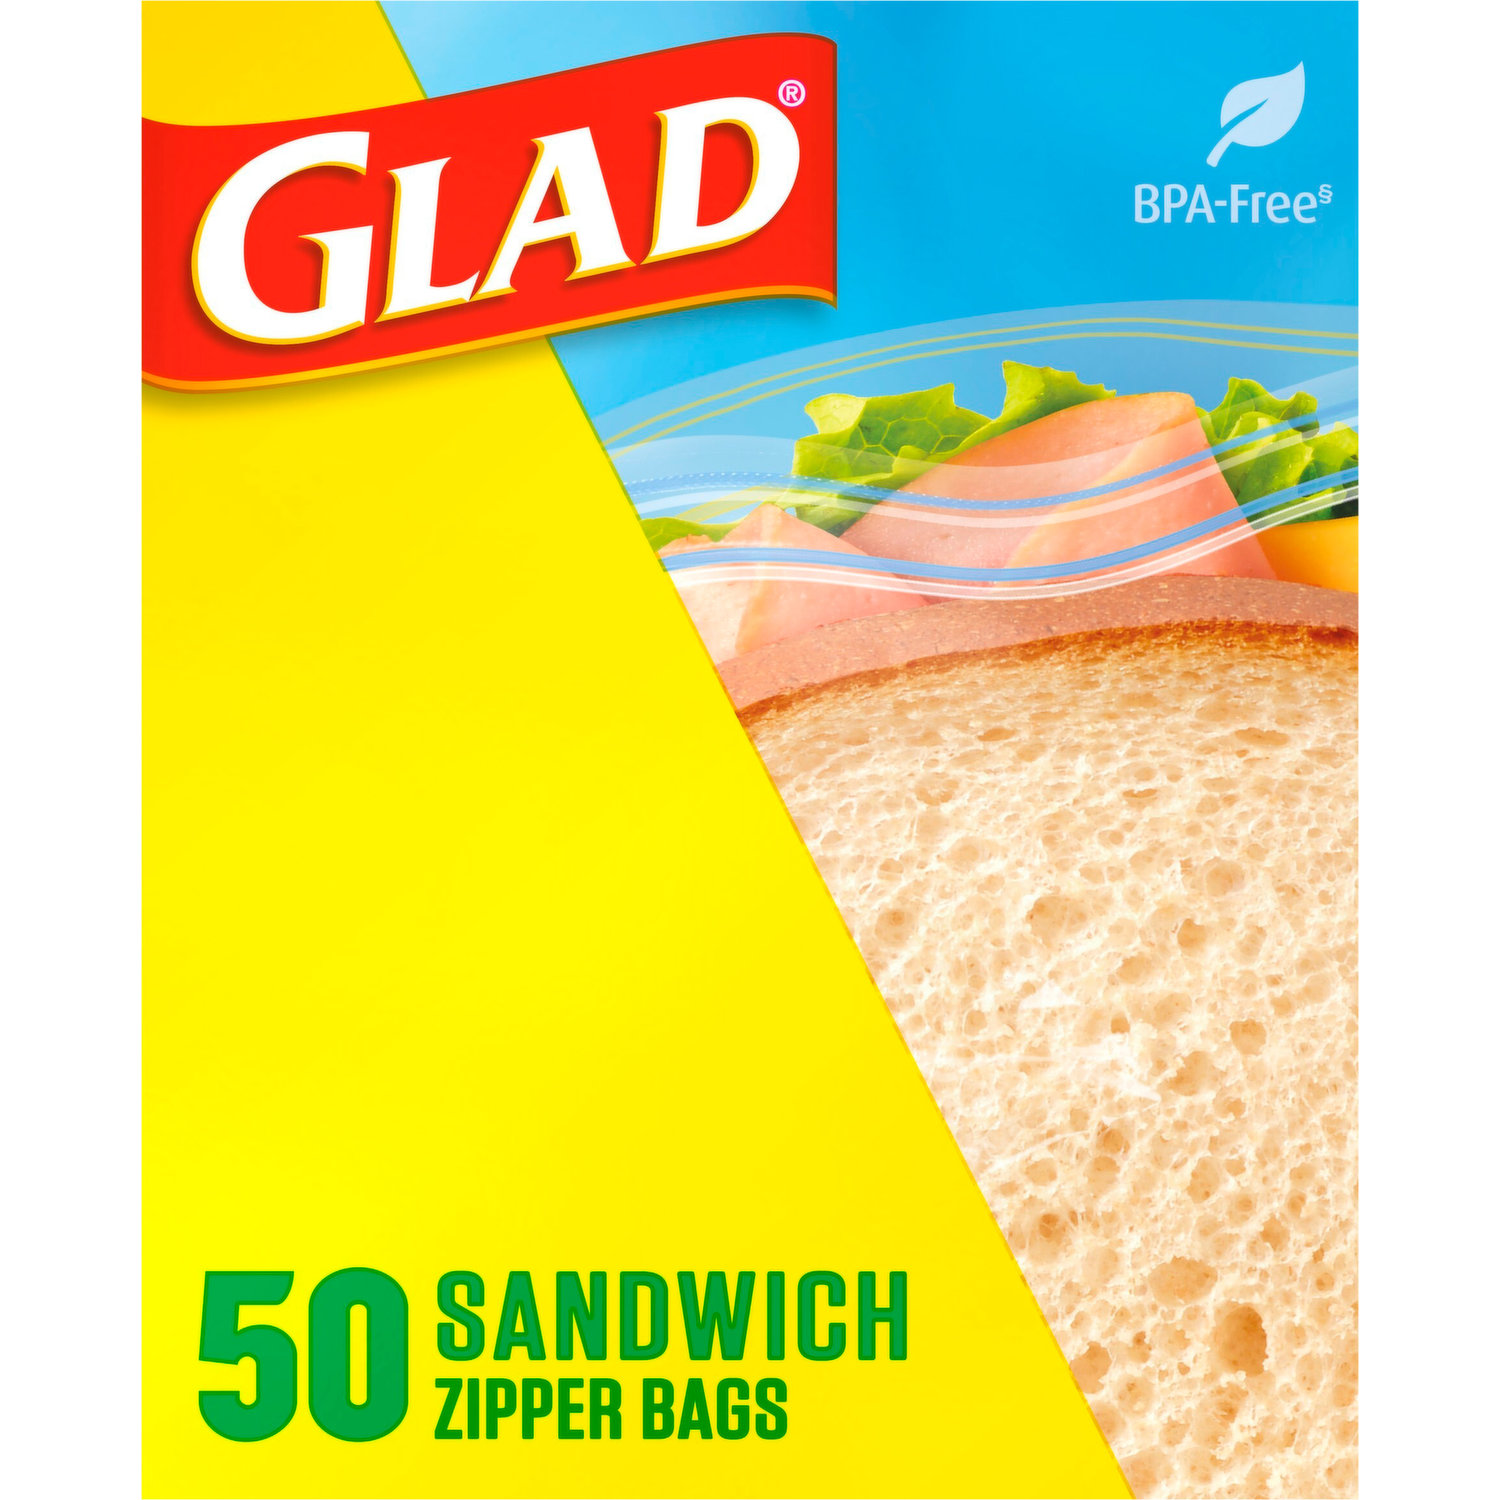  Glad Zipper Bags, Sandwich 50 bags : Health & Household